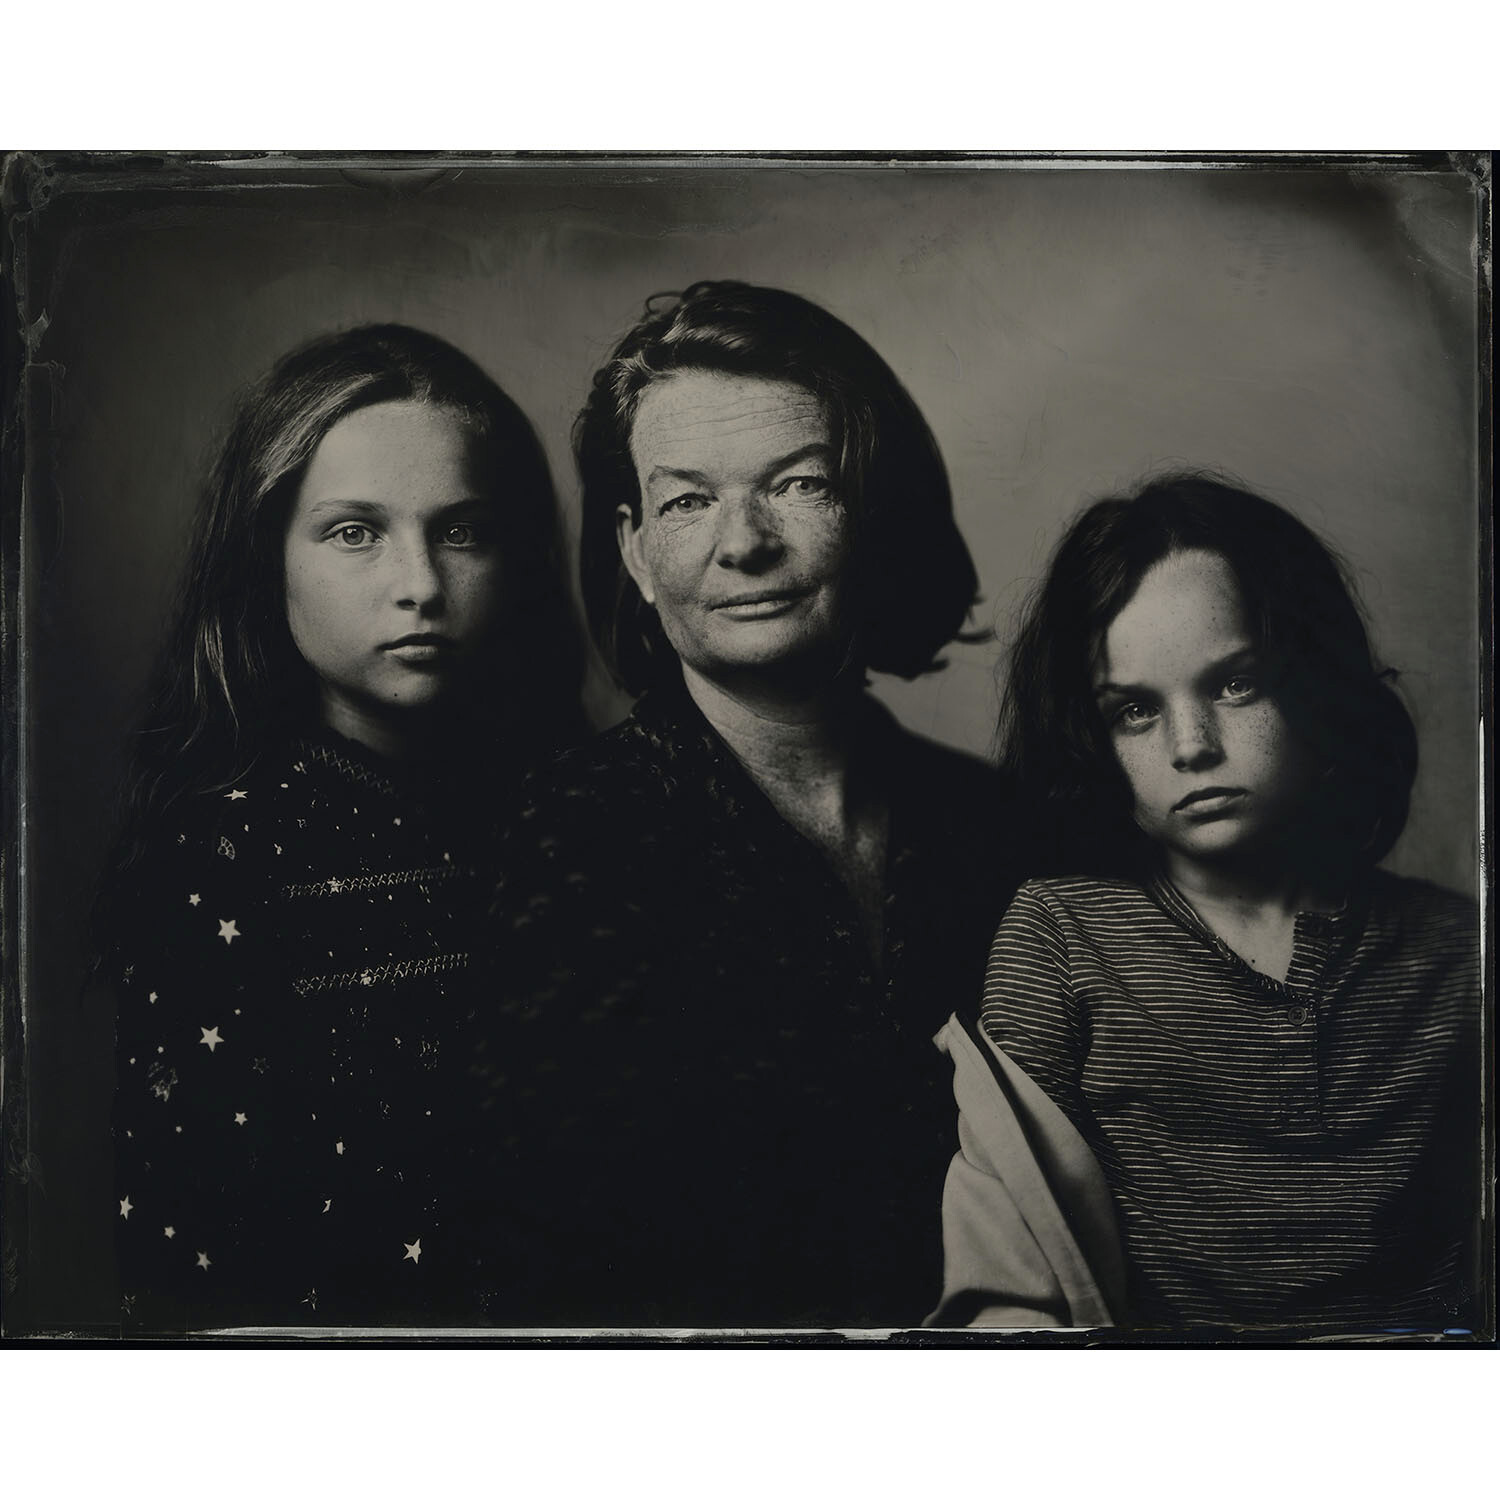 Katarina, Mika & Mara-Silver Portrait Store-Wet plate collodion-Tintype 20 x 25 cm